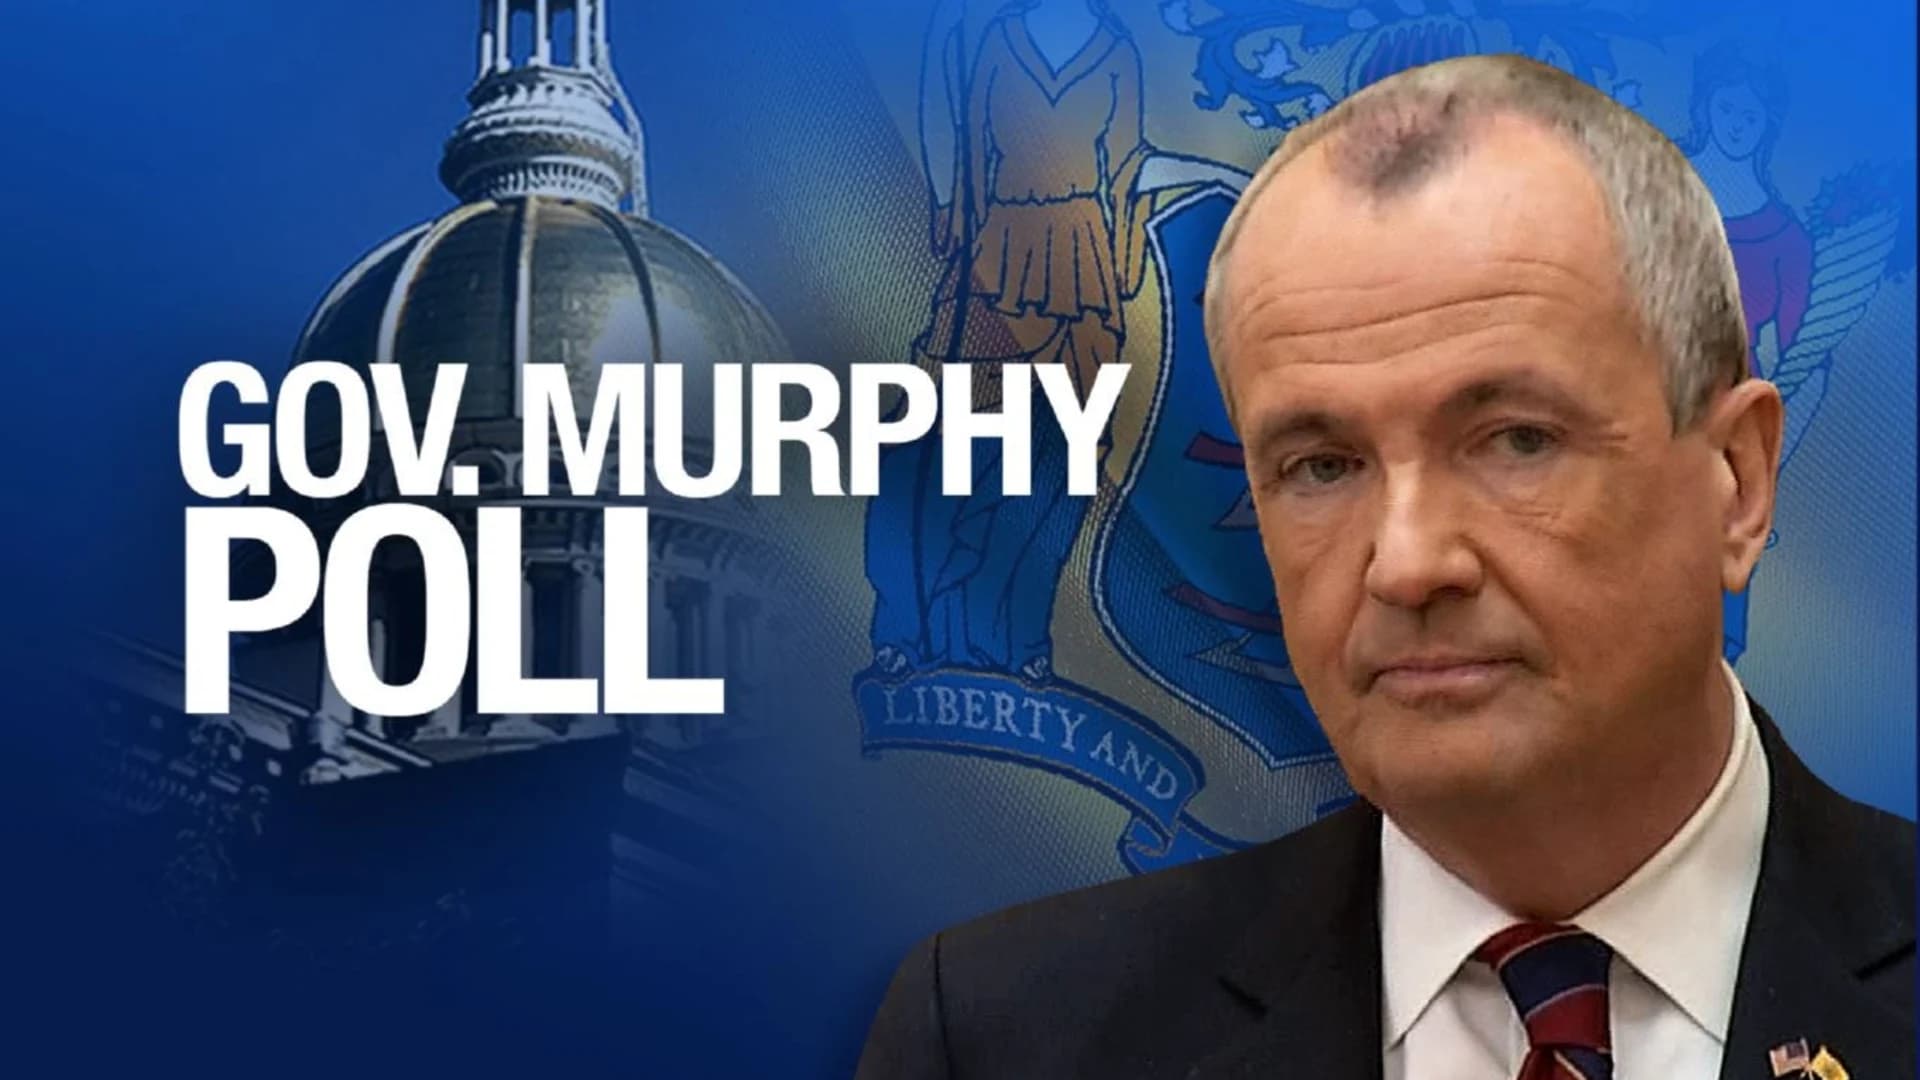 Poll finds New Jersey split on Gov. Murphy performance